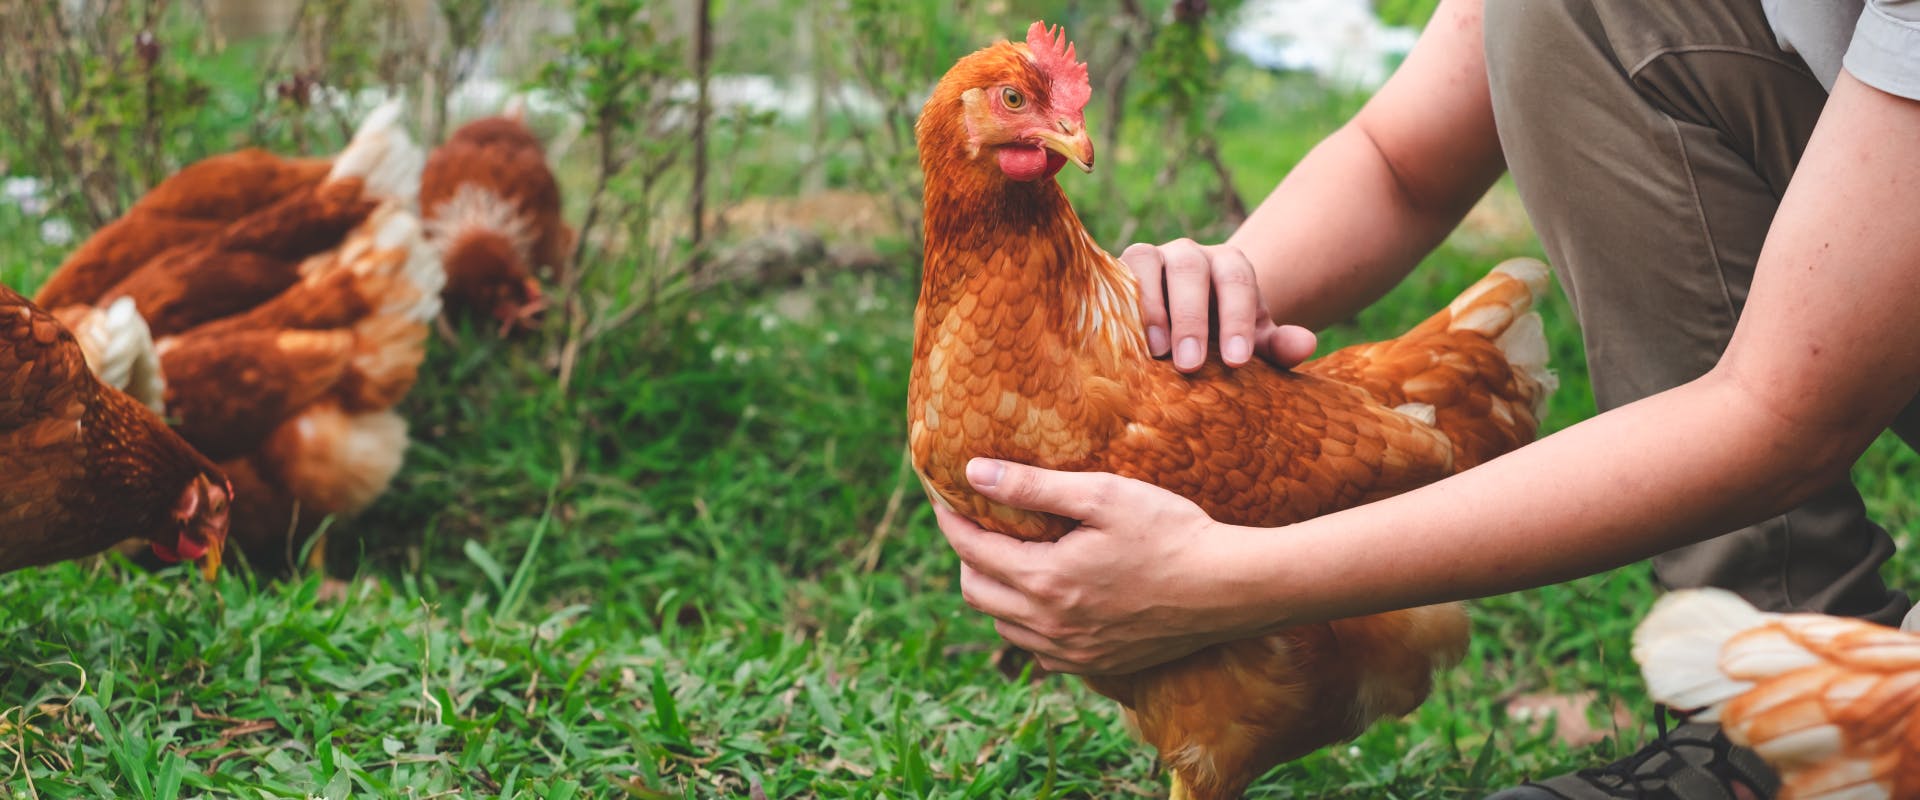 a chicken sitter gently holding a chicken